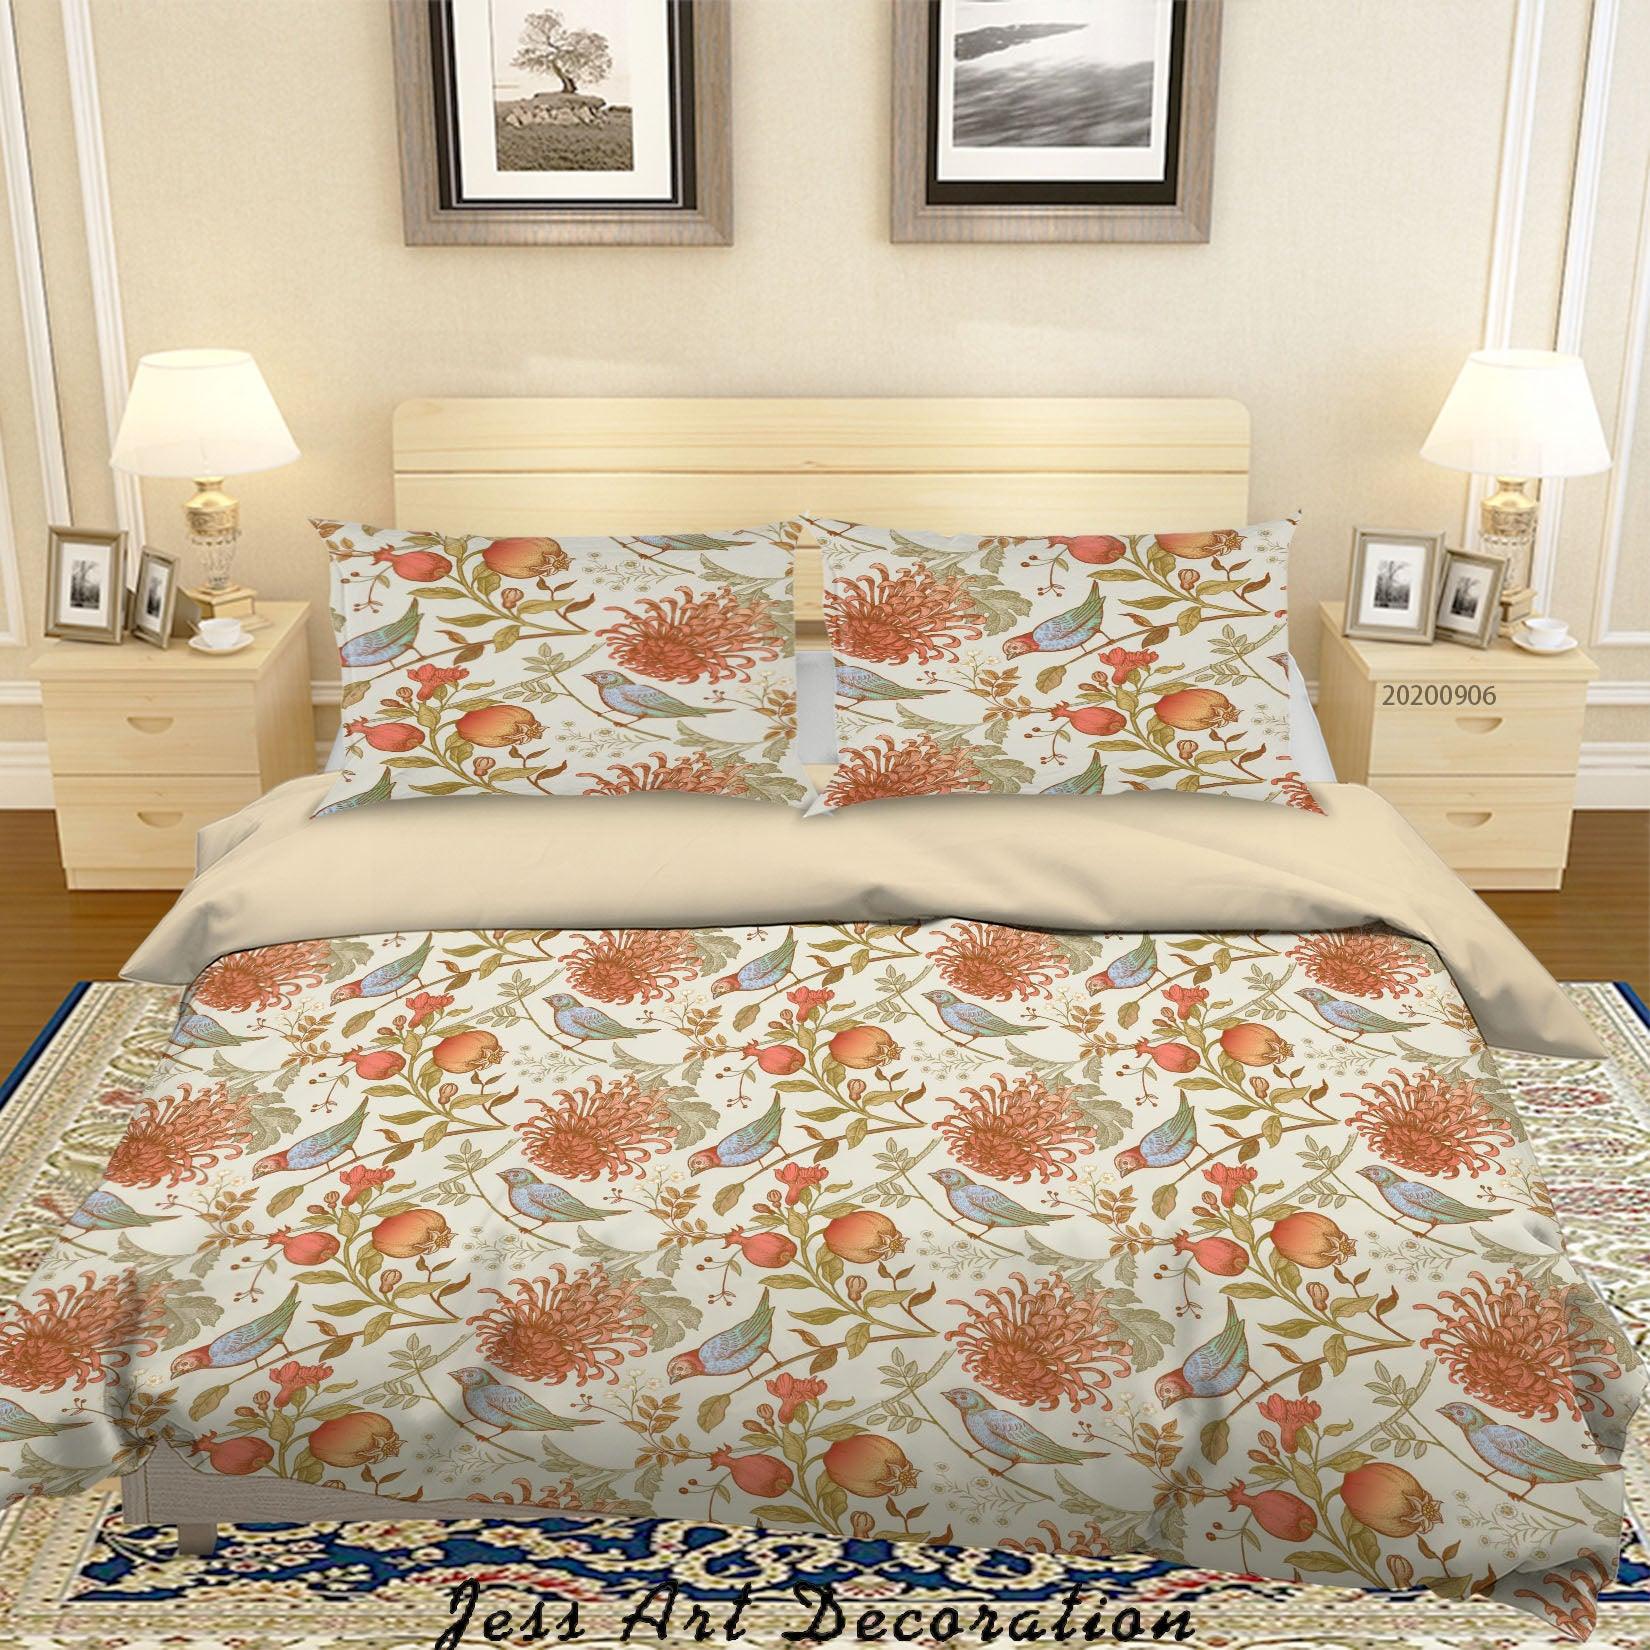 3D Vintage Leaves Red Floral Pattern Quilt Cover Set Bedding Set Duvet Cover Pillowcases WJ 3629- Jess Art Decoration